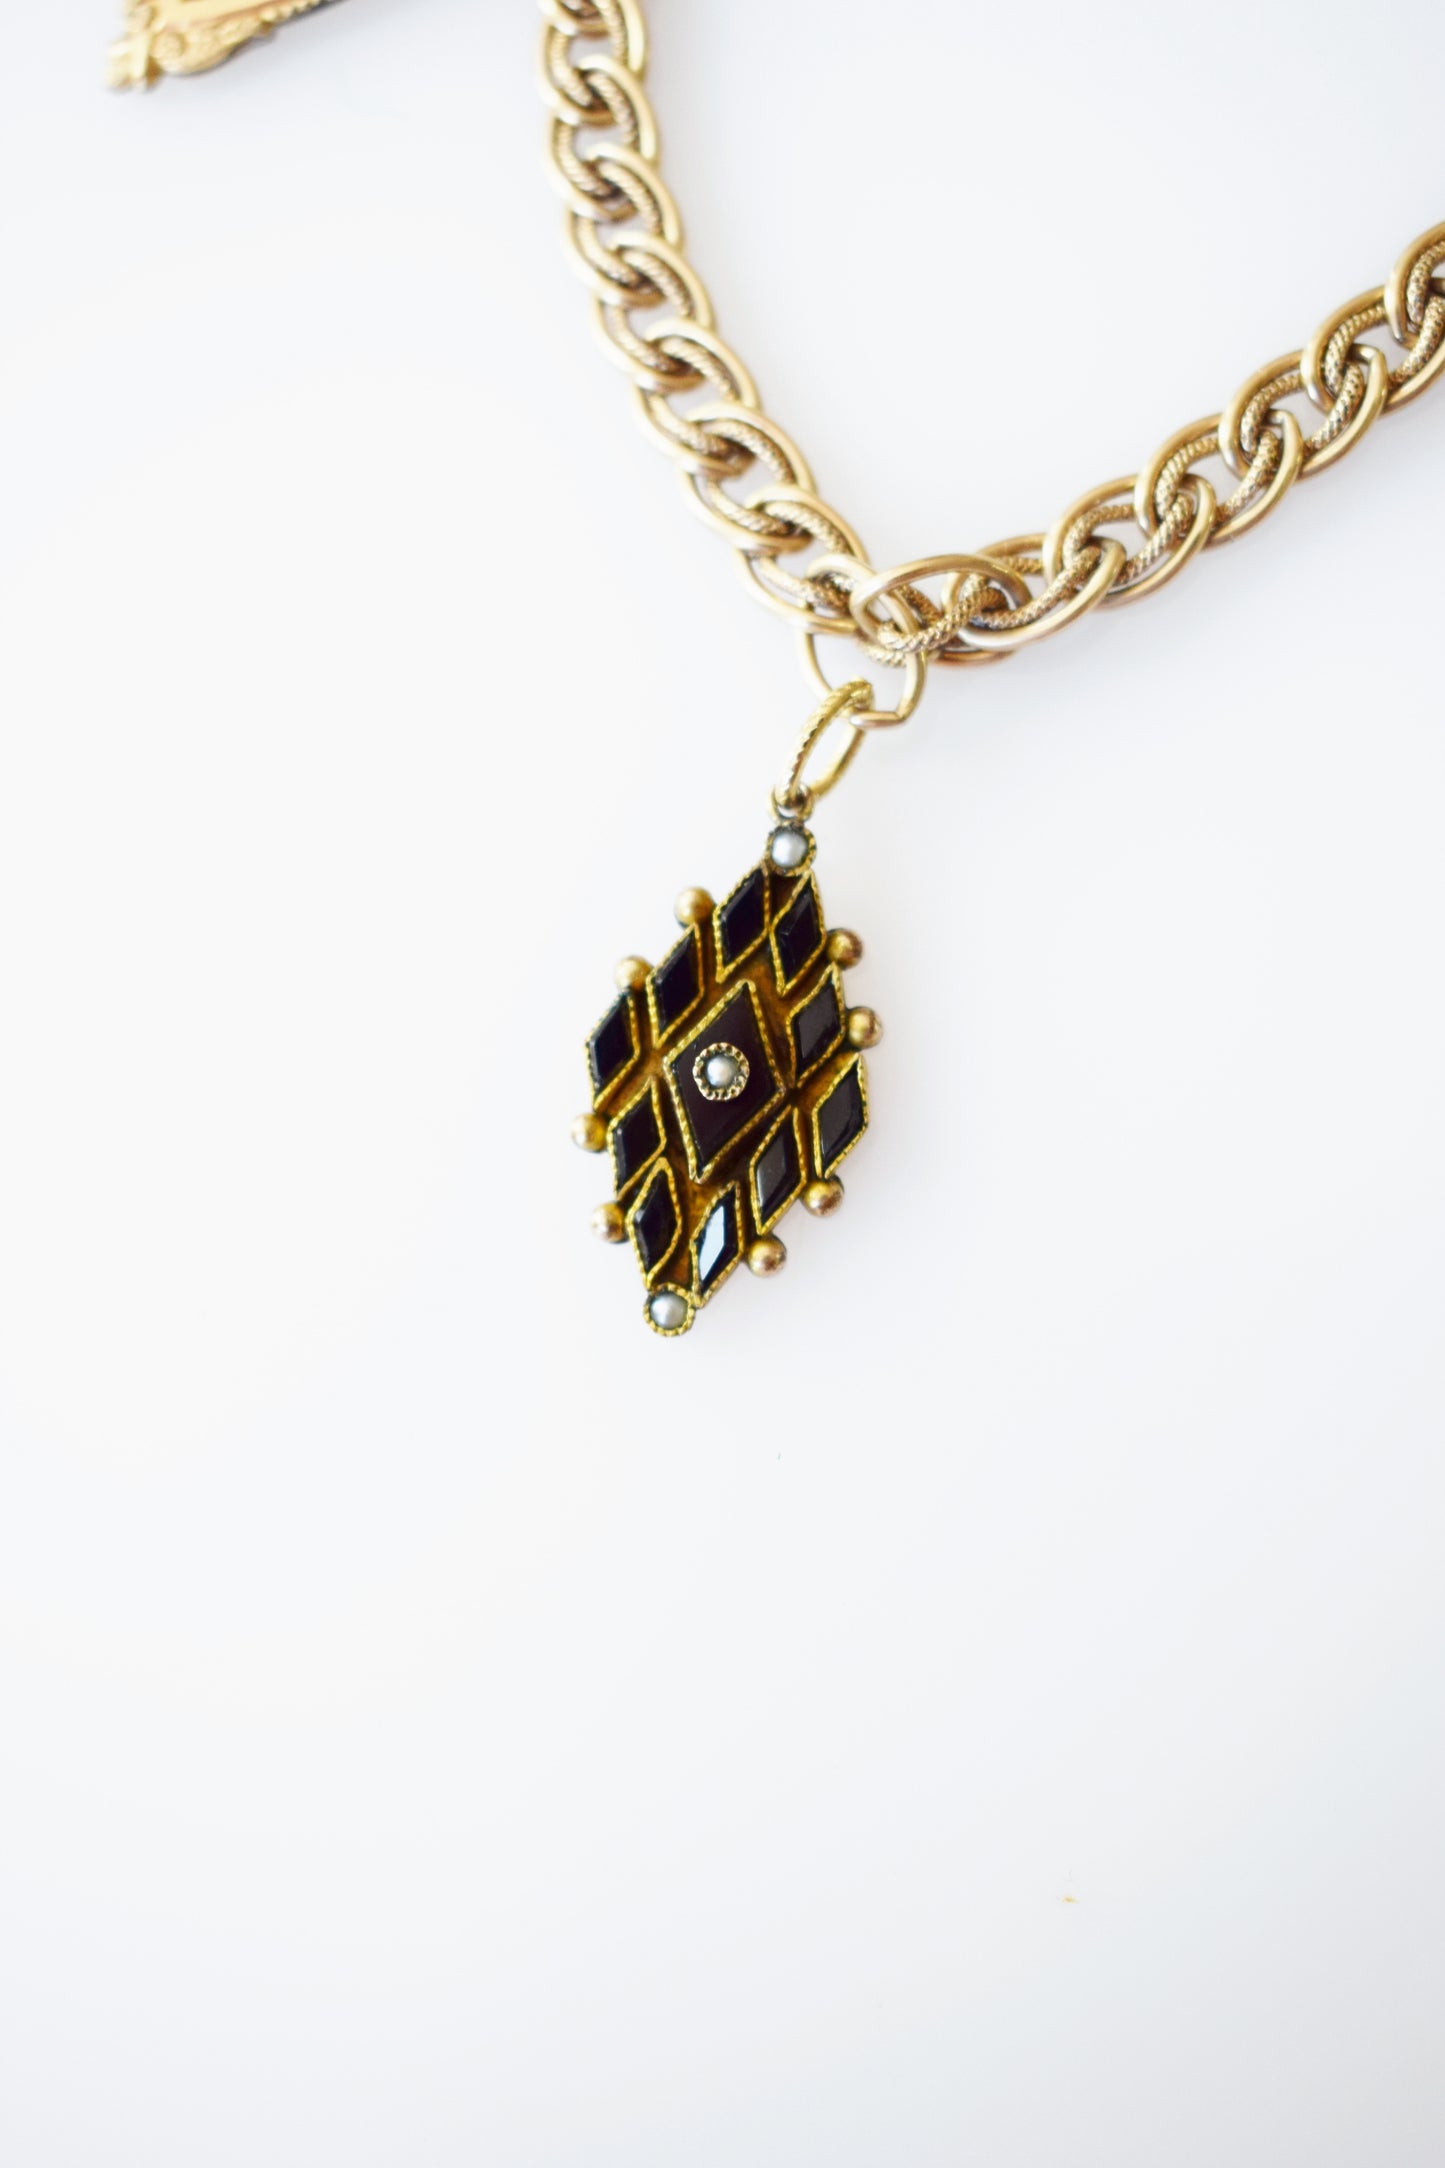 Vintage Gold-fill Curb Link Charm Bracelet by Winard